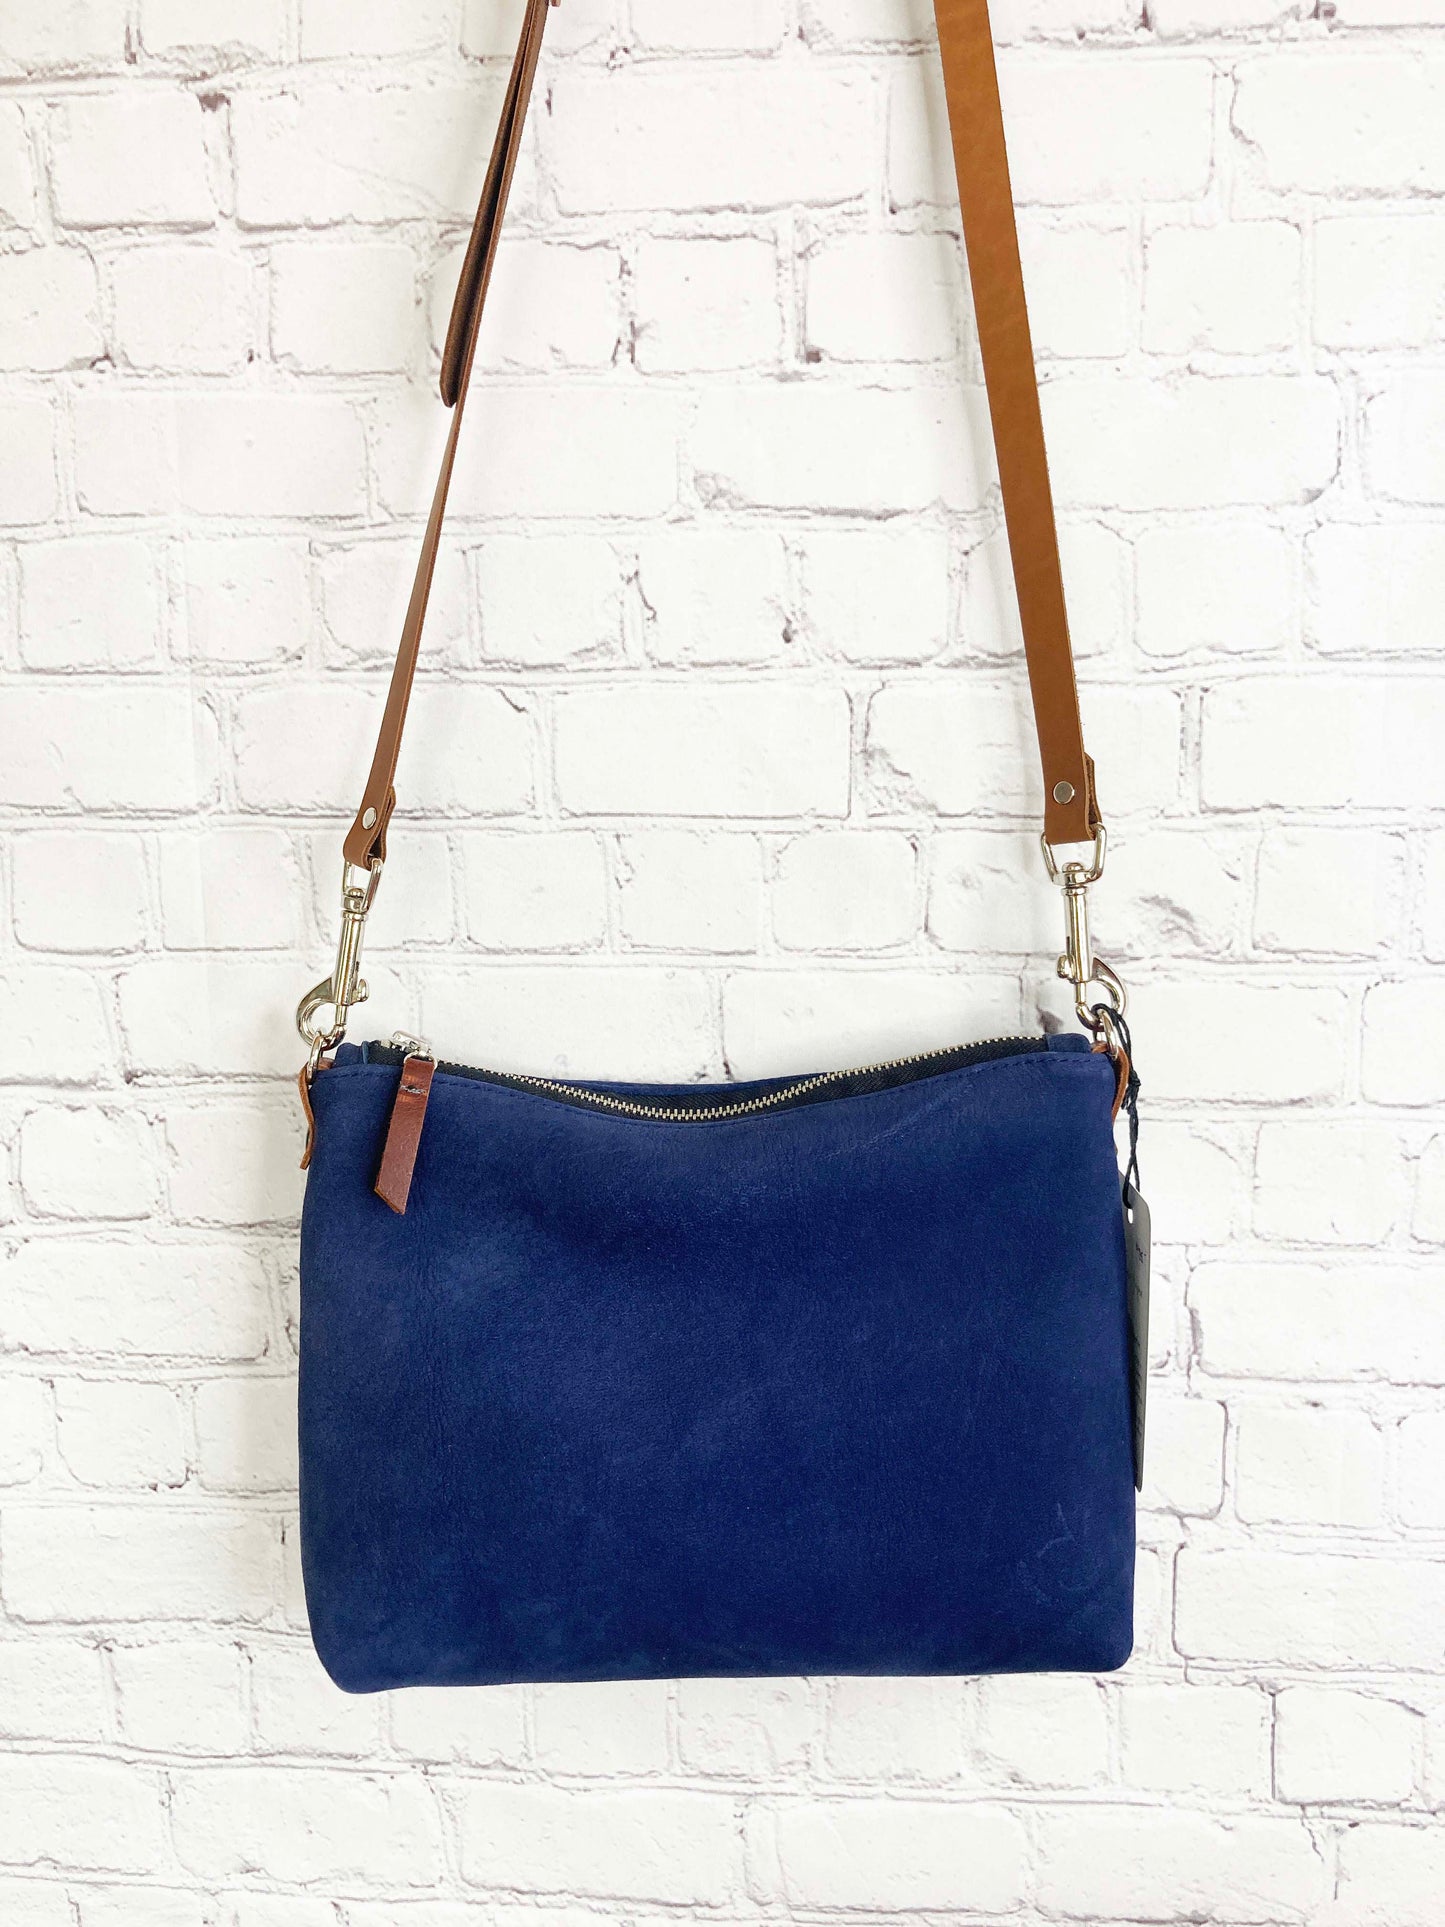 The Blue Suede Hayley Bag